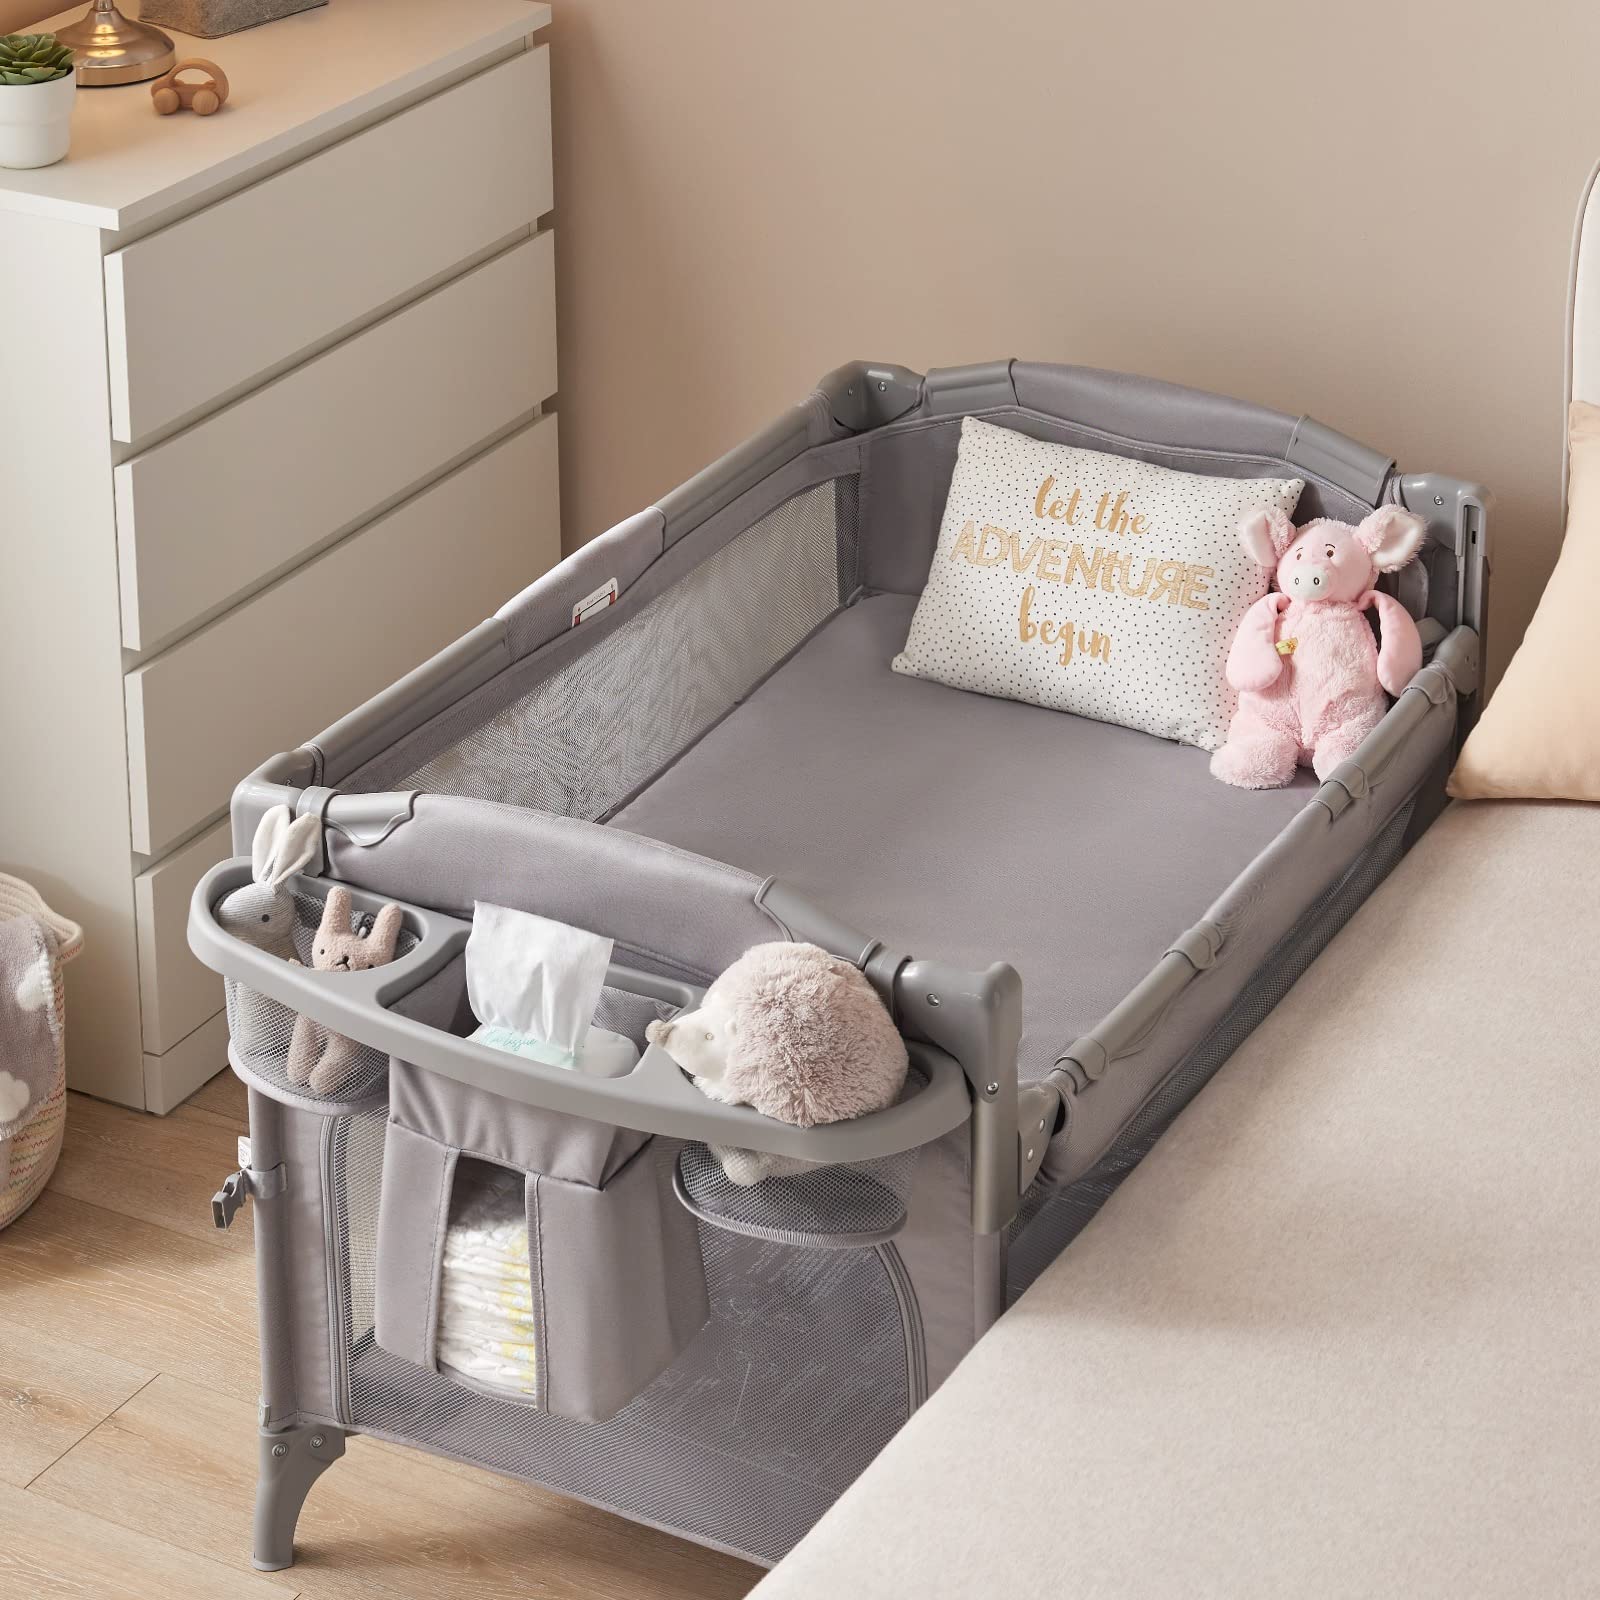 Beka Baby 4 in 1 Bedside Sleeper, Baby Crib 4 Functions, Crib Sleeper, Playard, Changing Table, Bassinet for Newborn Baby